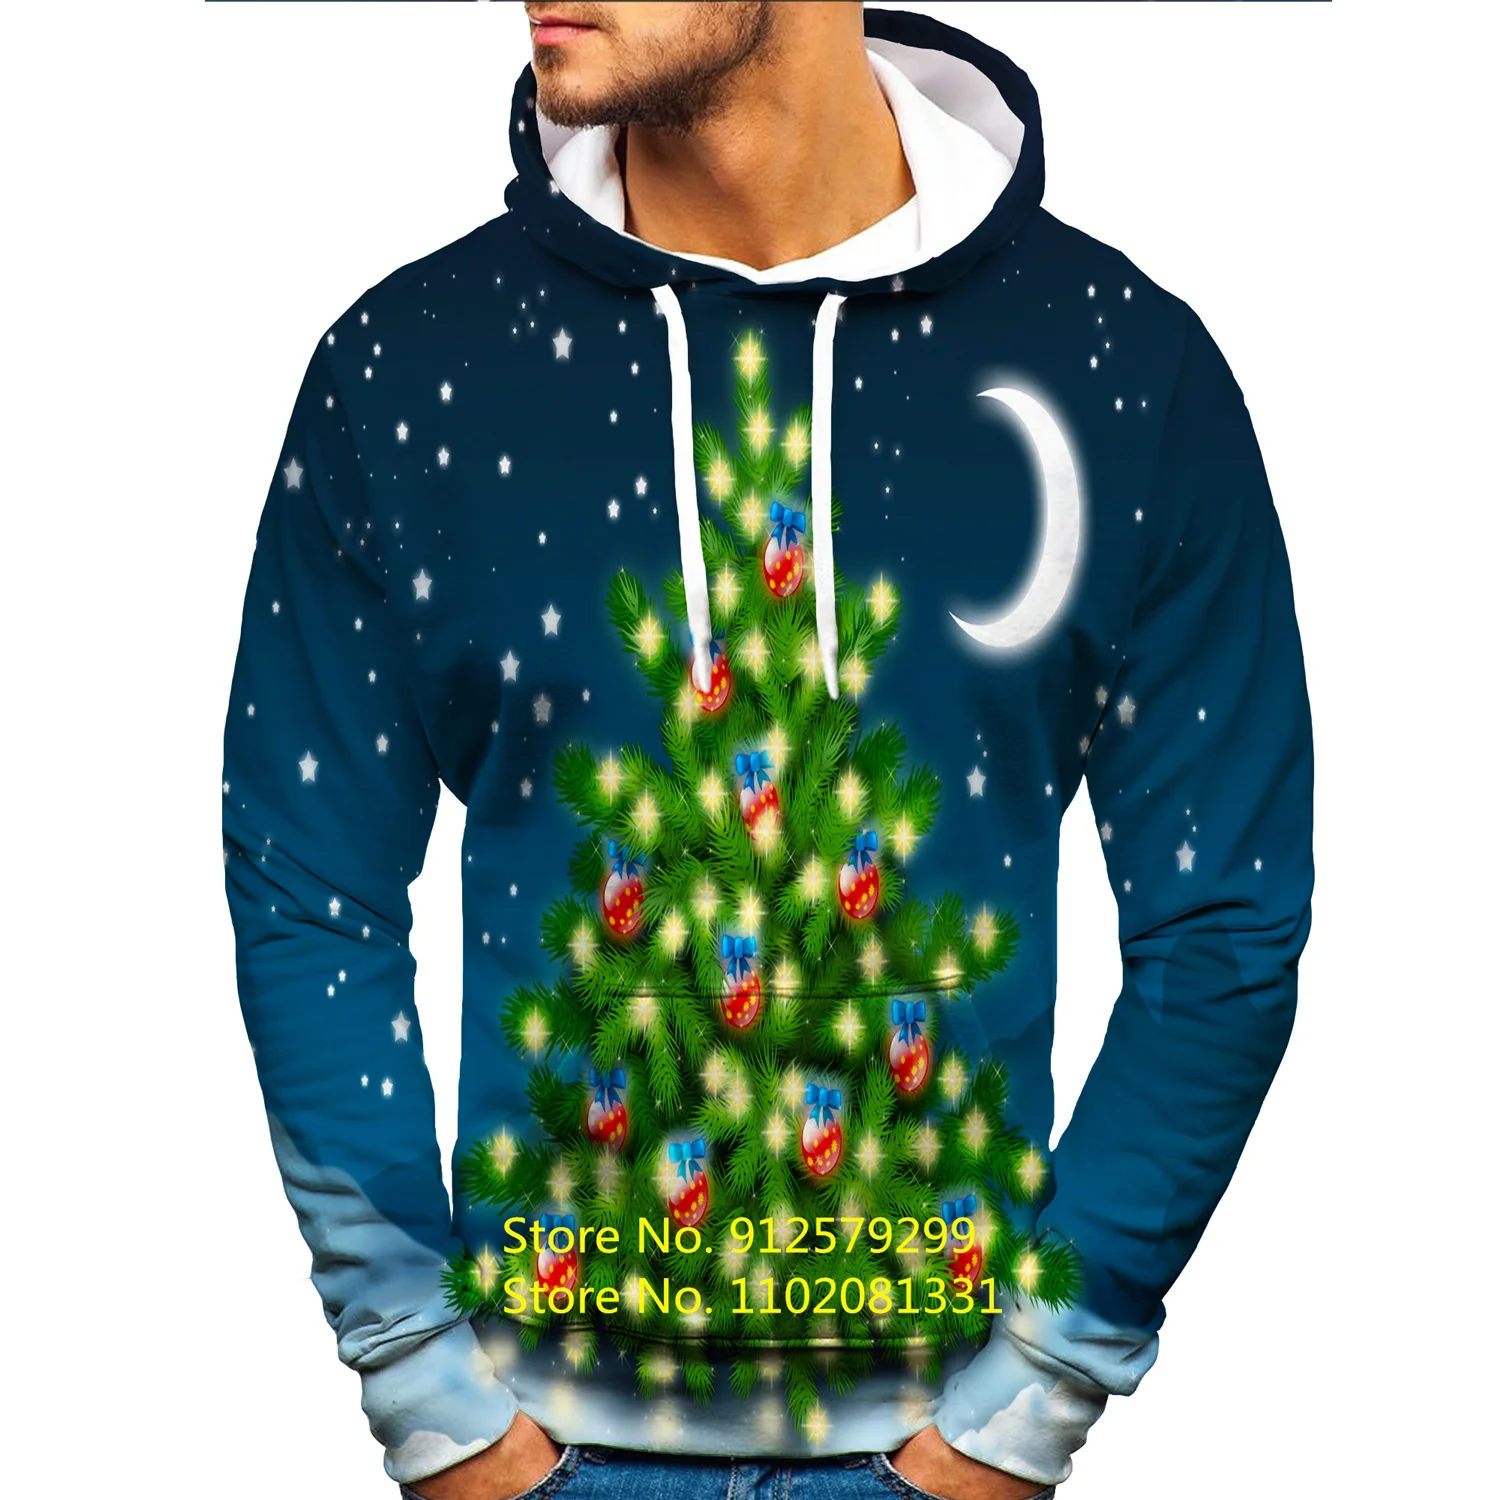 Newest Christmas Pattern 3d Print Hoodies Men/Women Fashion Sweatshirts Pullovers Sport Tops